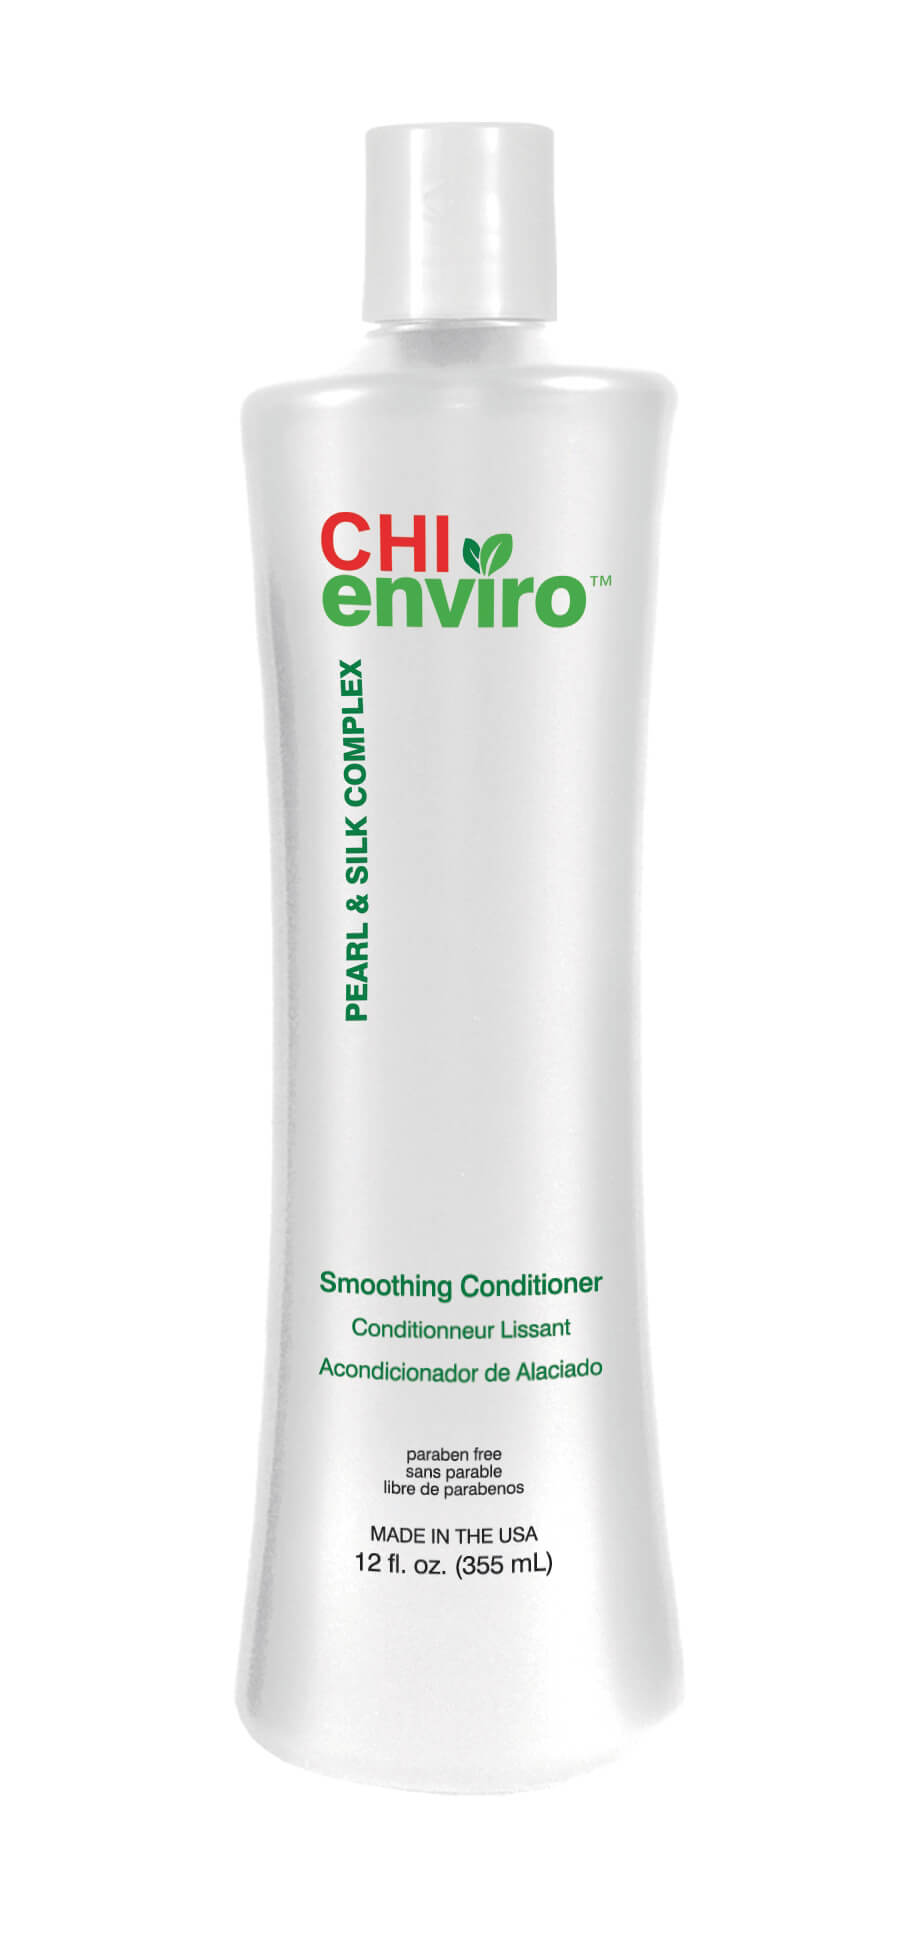 CHI Enviro - Smoothing Conditioner 355 ml